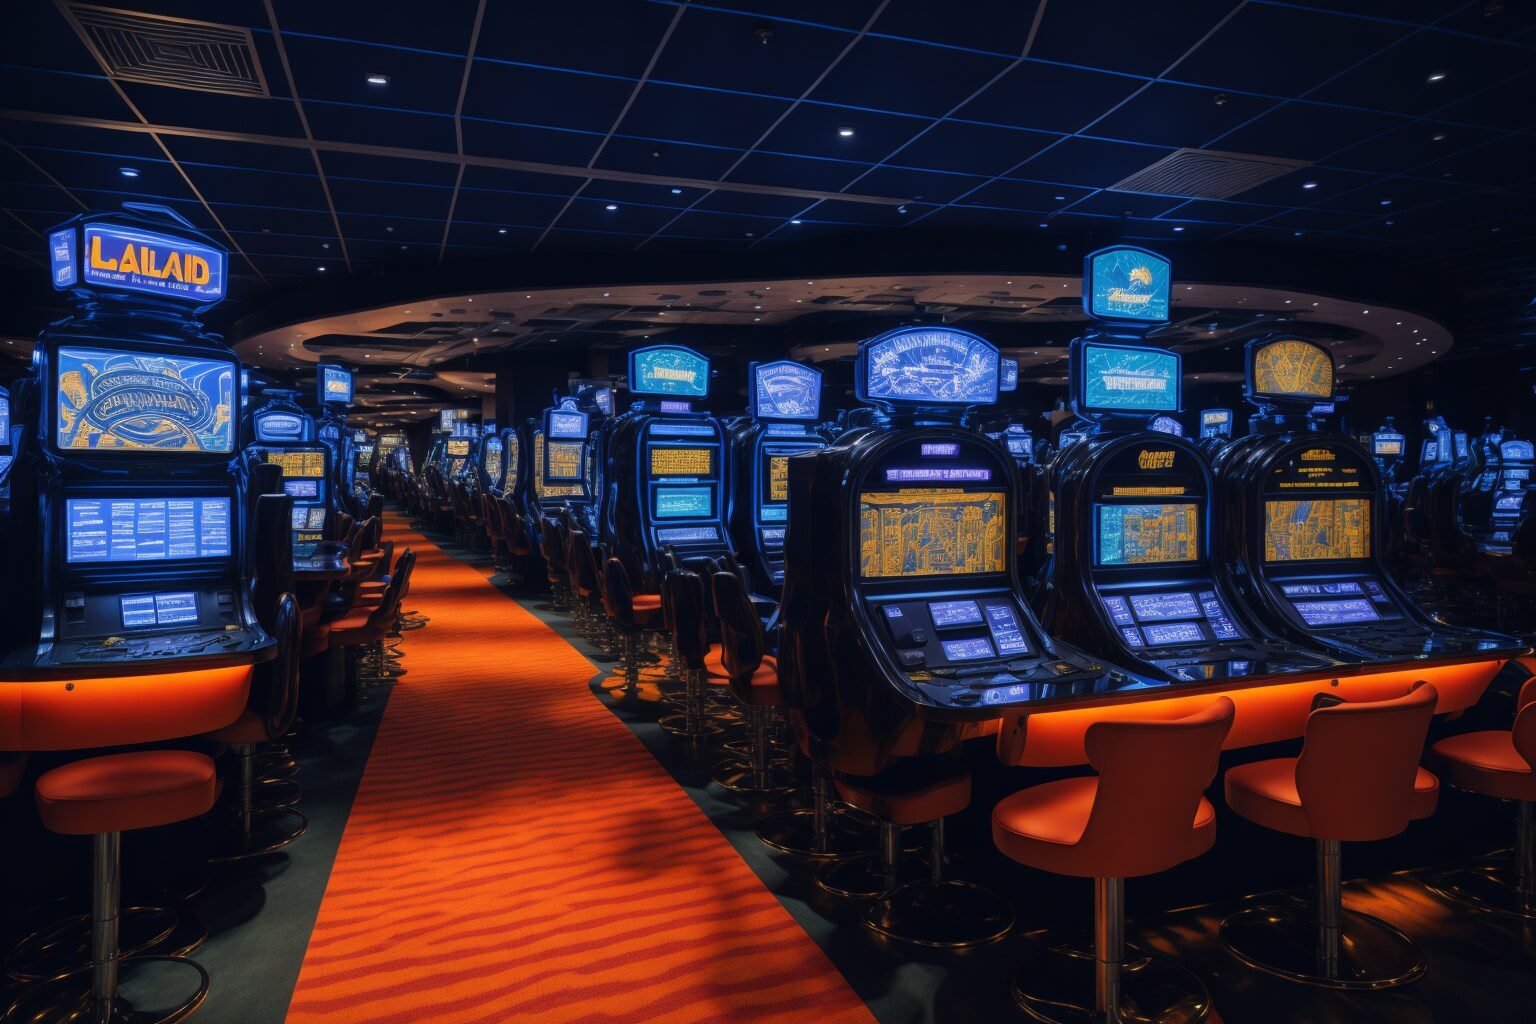 image to image 40 Leonardo Diffusion interior of a casino specifically focusing 0